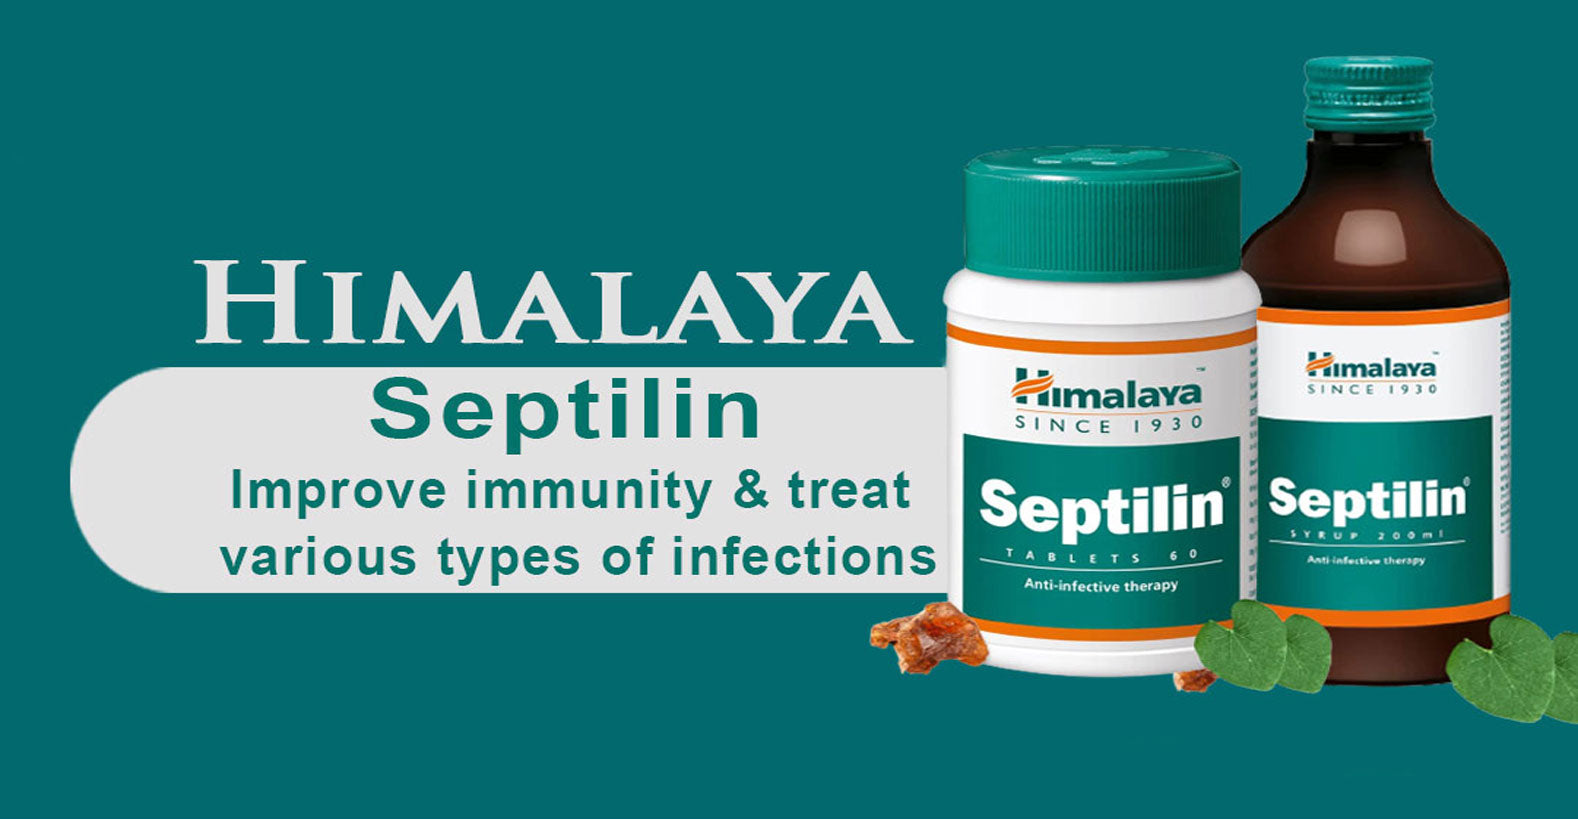 Himalaya Septilin Tablets & Syrup